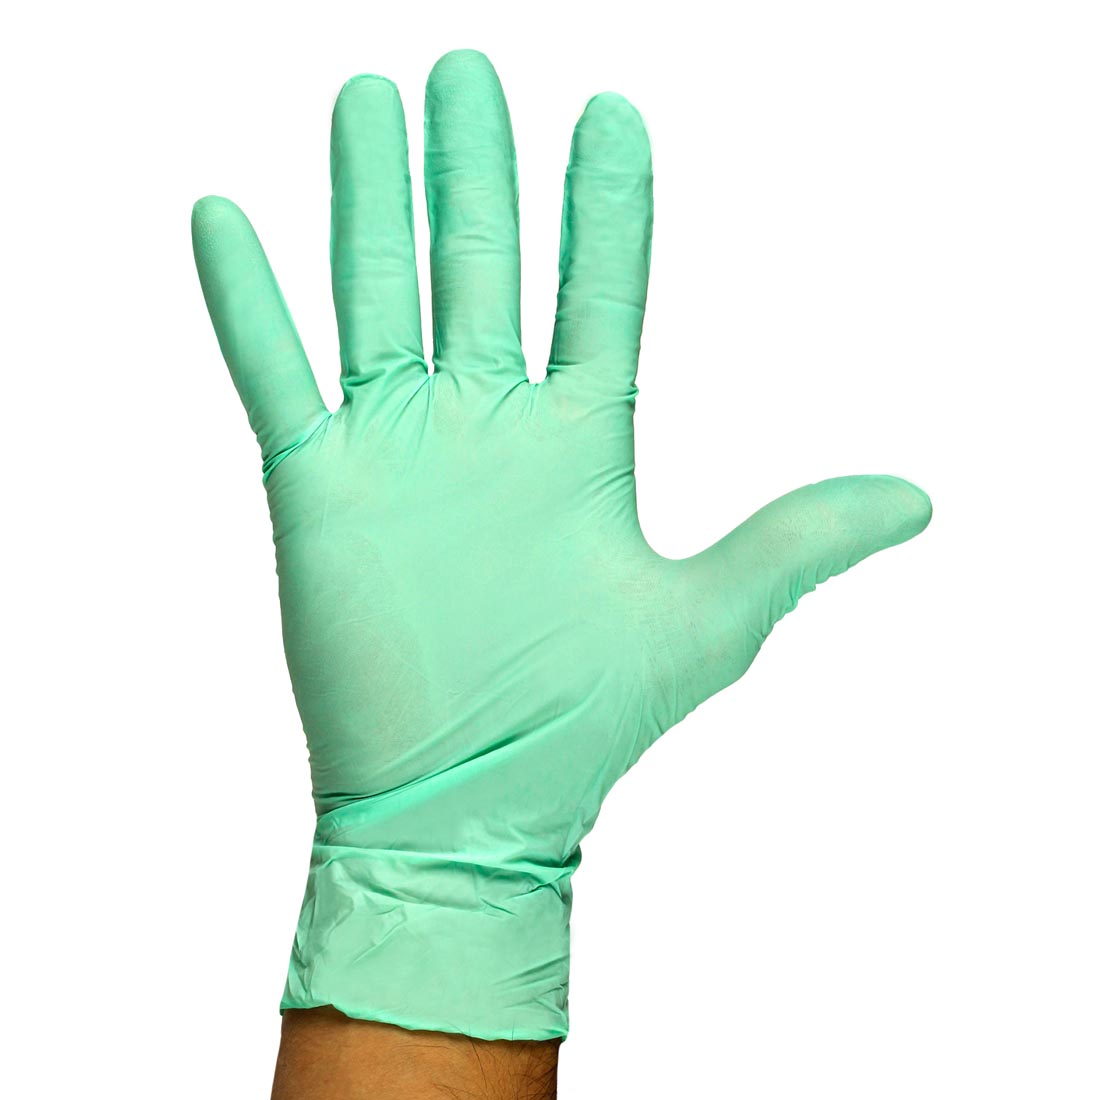 hand wearing a Hygloss Adult Craft Glove